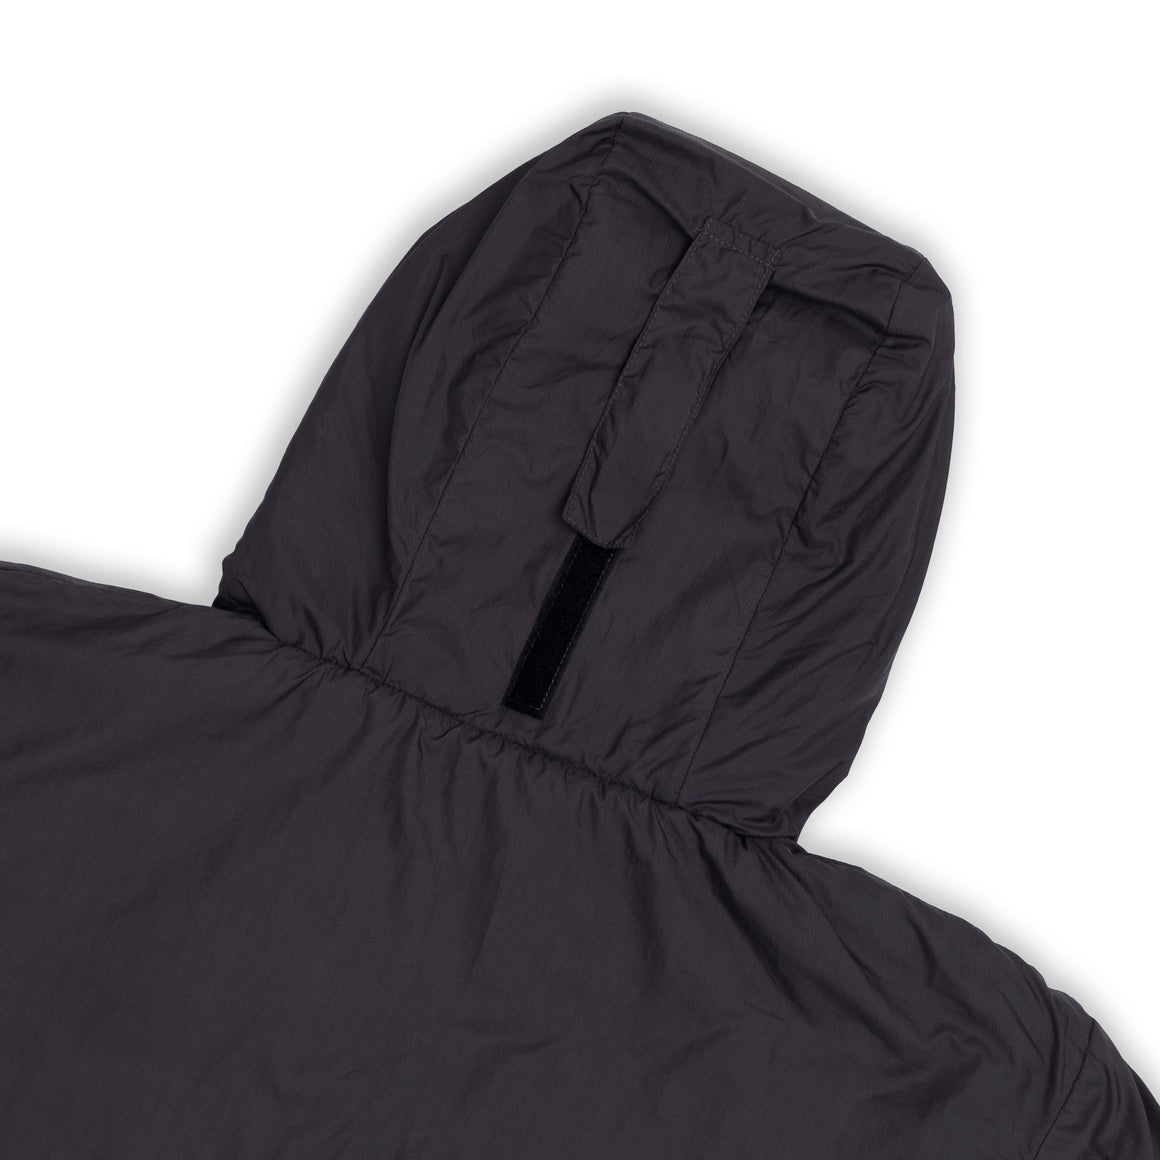 Cozybag Comfort - the perfect camping sleeping bag